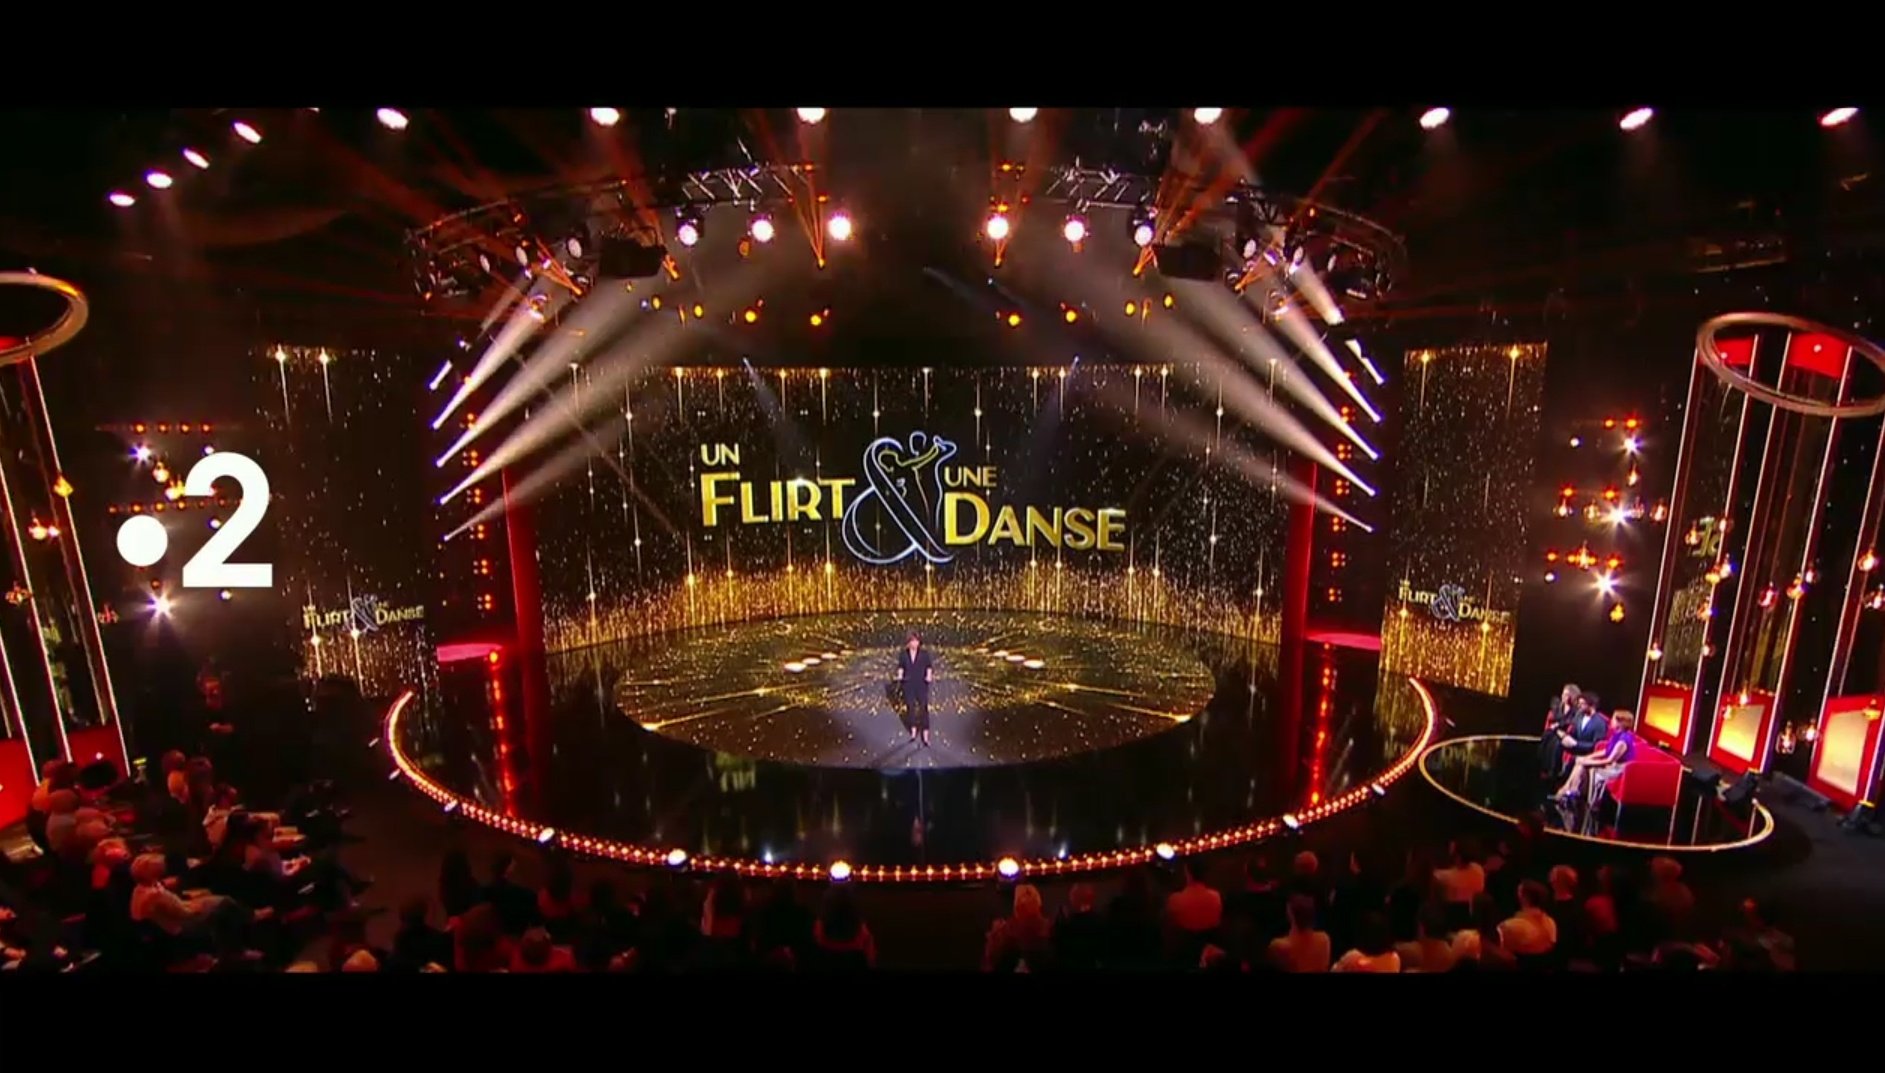 Un flirt une danse - France 2 - Faustine Bollaert - 